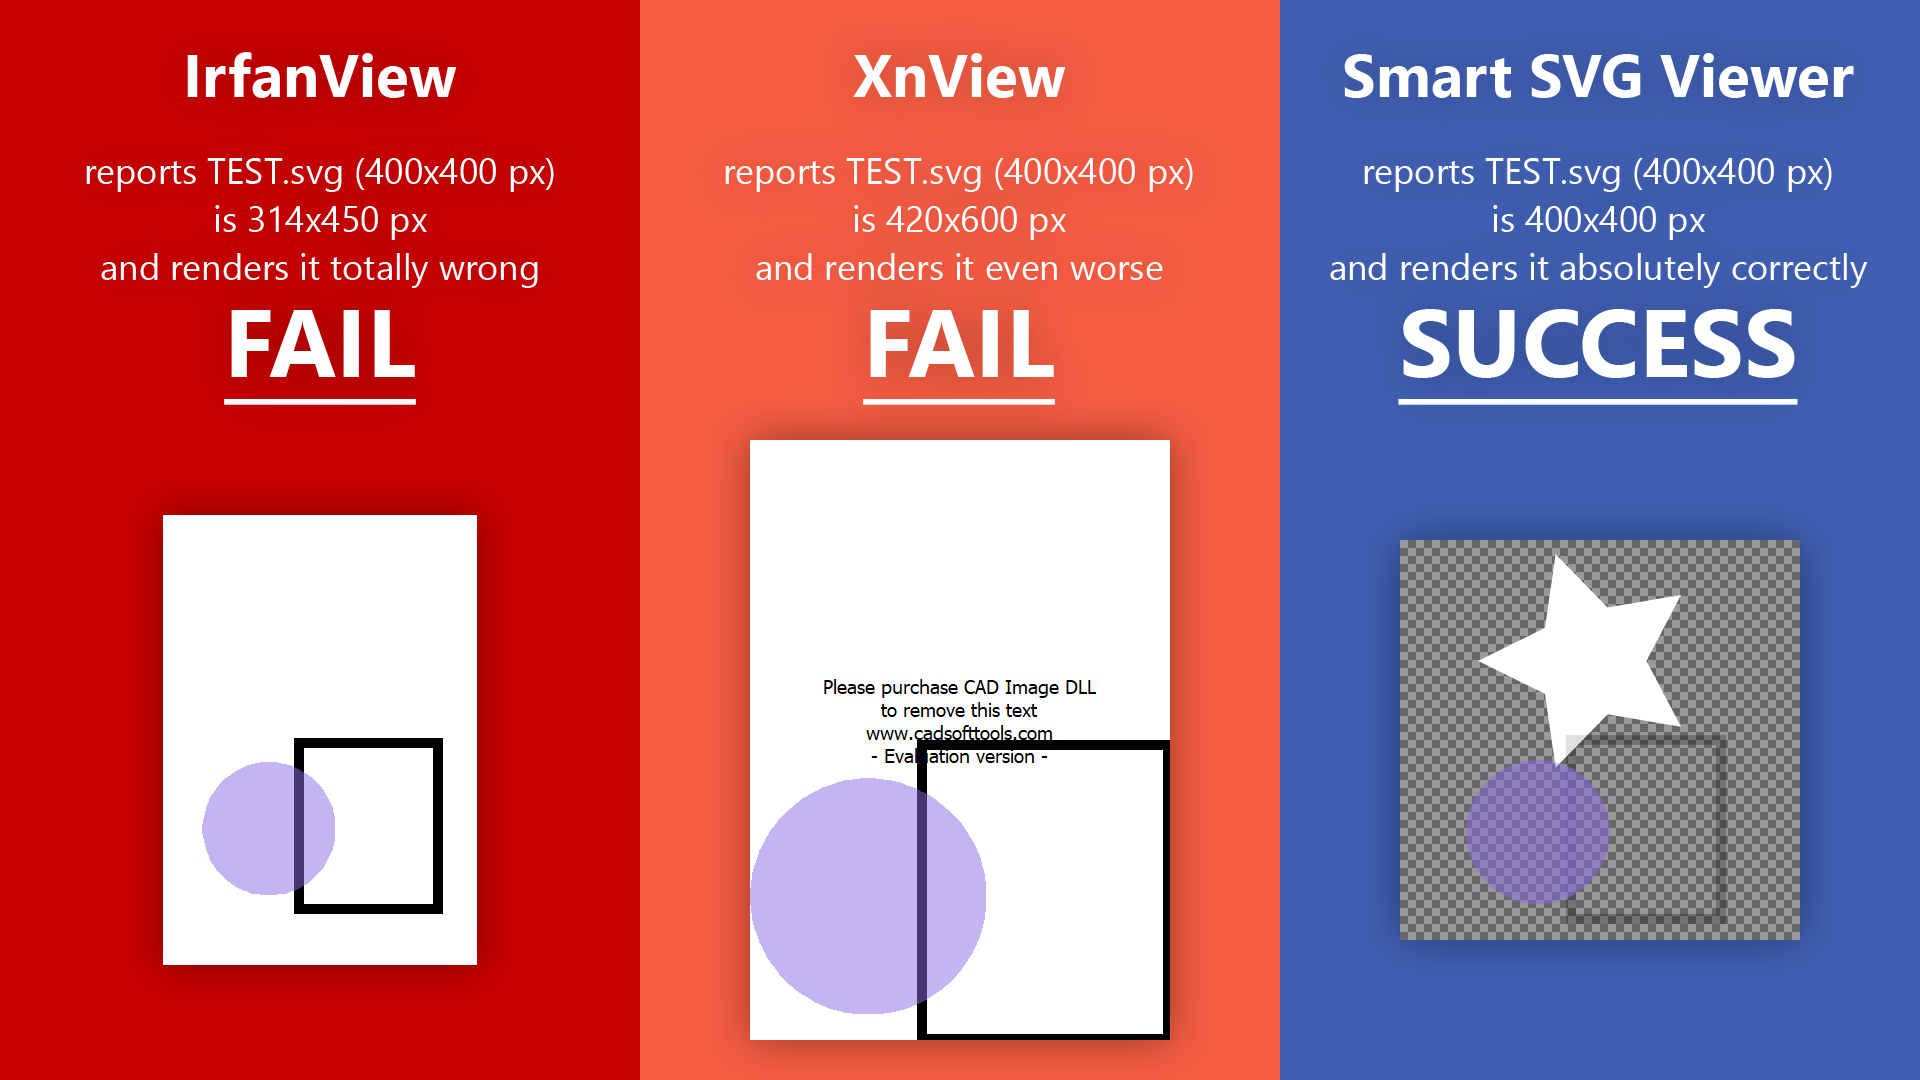 “Smart SVG Viewer” vs Popular image viewers